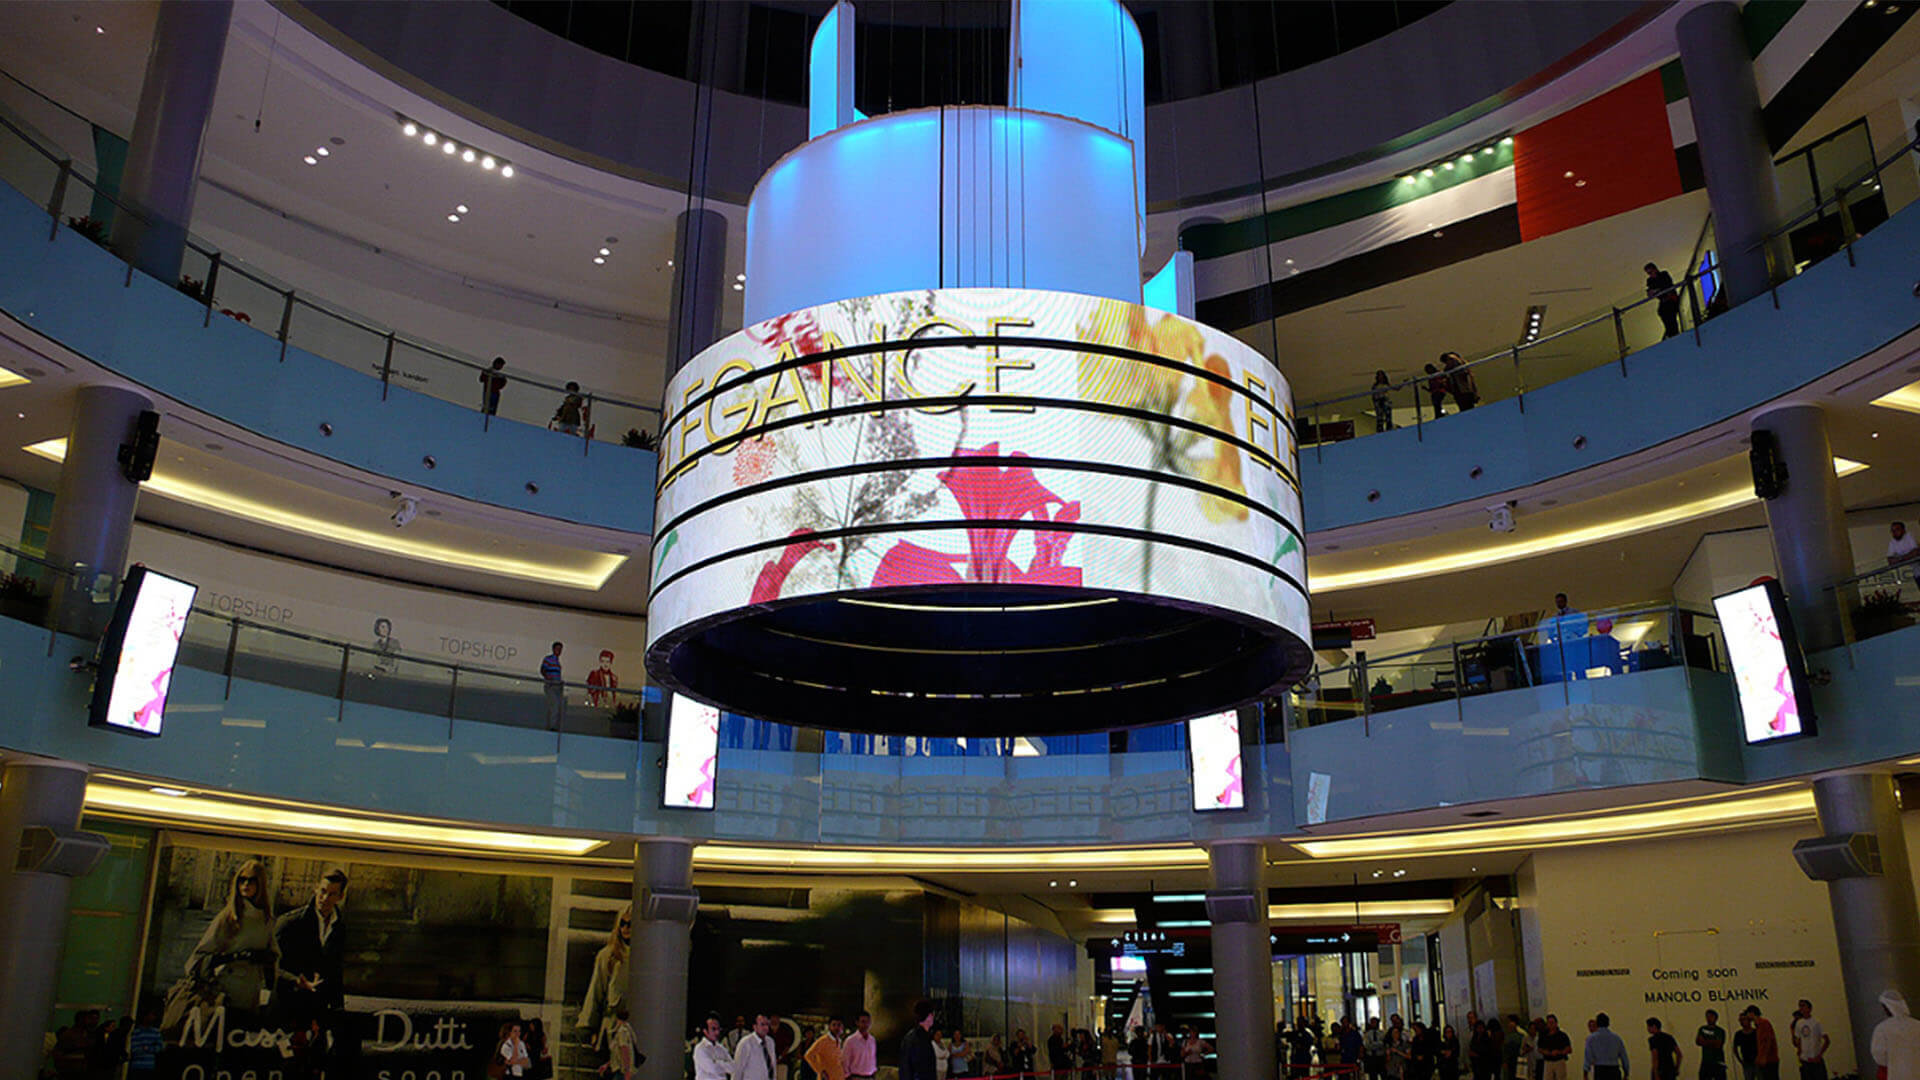 A stunning digital visualizer at Dubai Mall